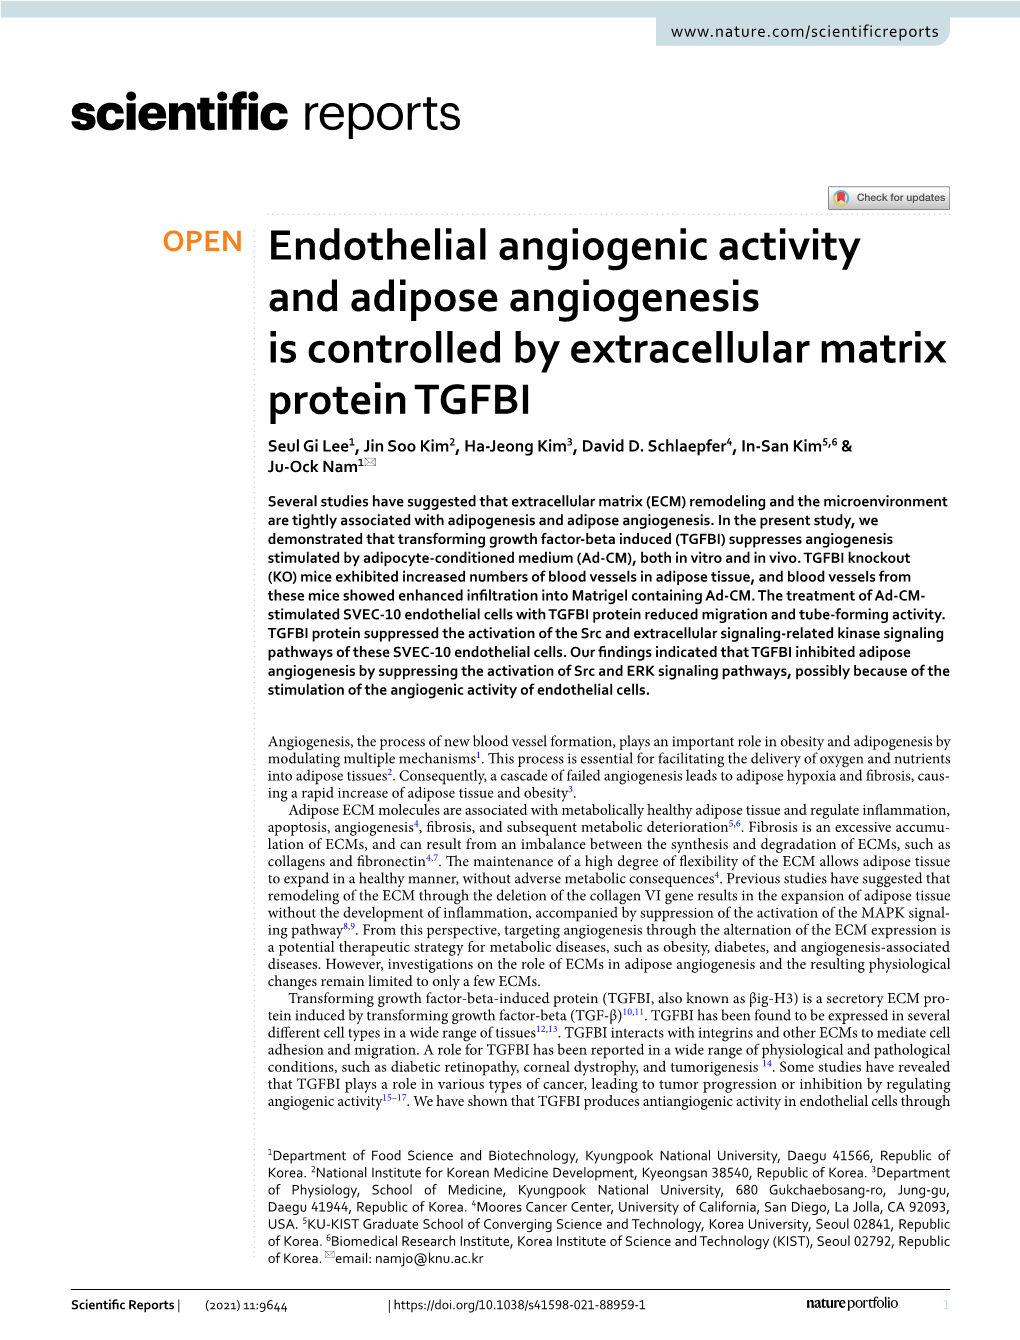 Endothelial Angiogenic Activity and Adipose Angiogenesis Is Controlled by Extracellular Matrix Protein TGFBI Seul Gi Lee1, Jin Soo Kim2, Ha‑Jeong Kim3, David D